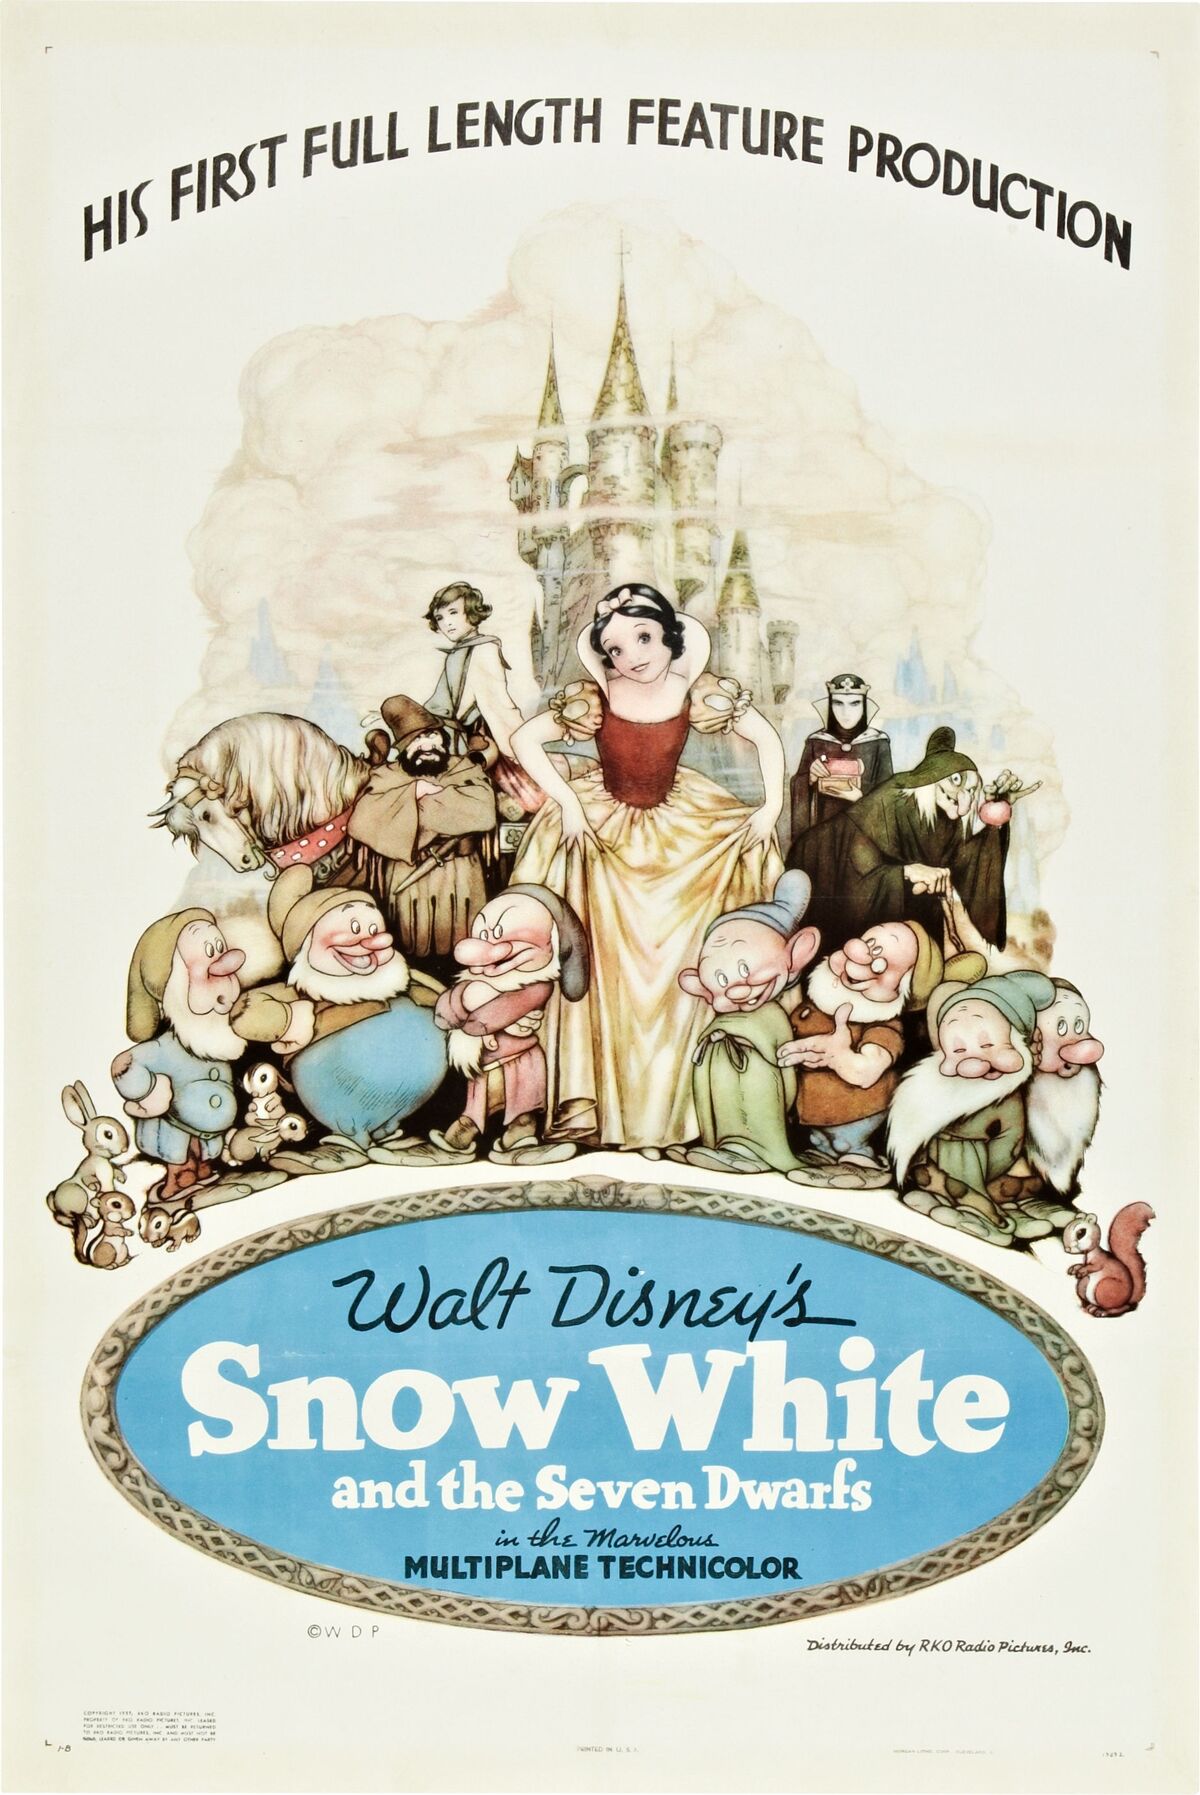 Heigh ho! Snow White's dwarves' original names revealed